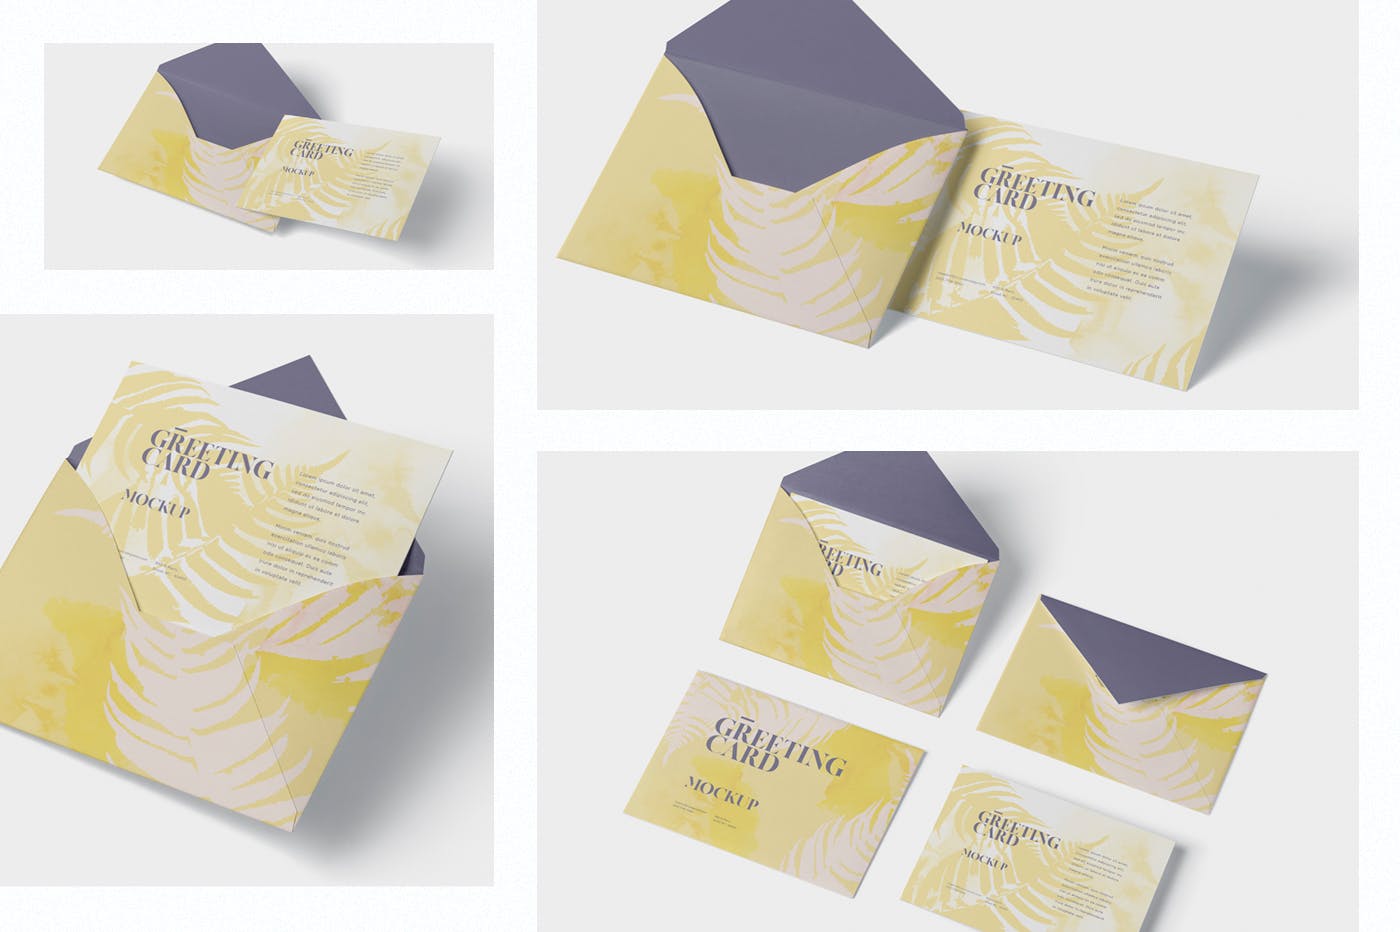 高端企业信封&贺卡设计图素材库精选 Greeting Card Mockup with Envelope – A6 Size插图(1)